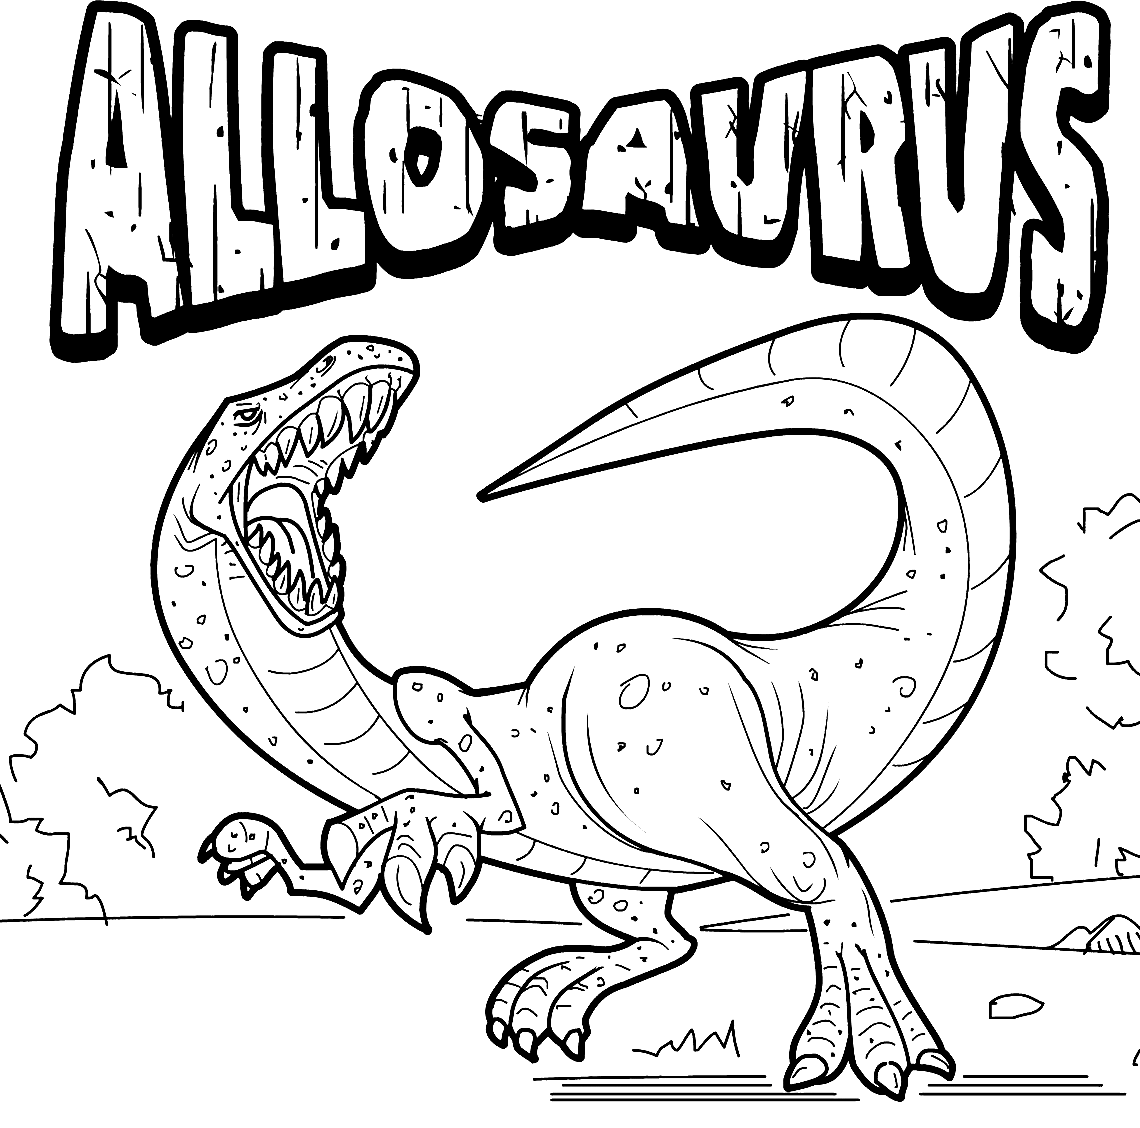 Allosaurus Dinosaur 1 Coloring Page